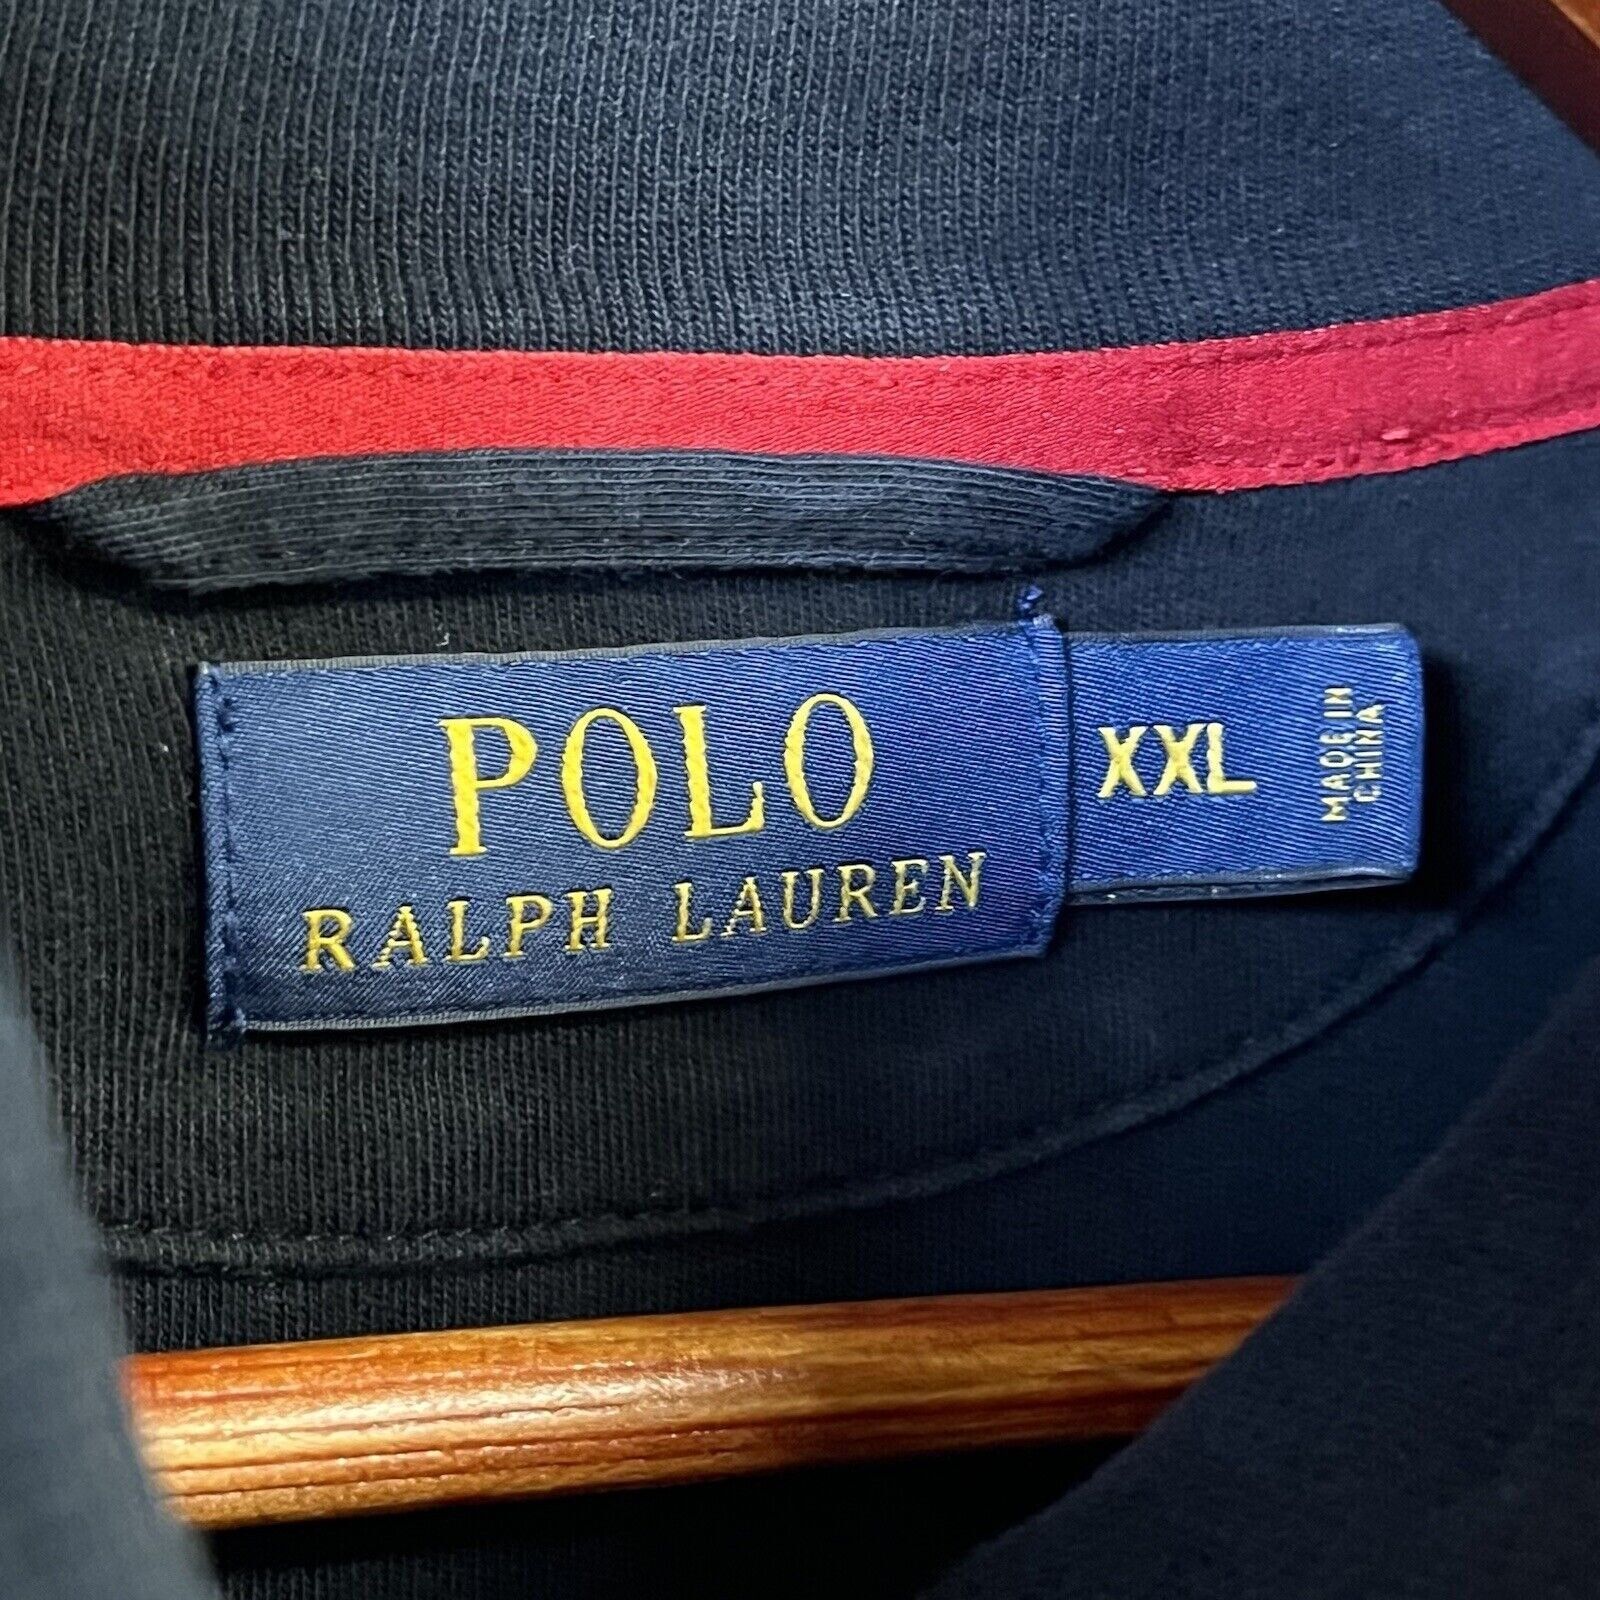 Polo Ralph Lauren Polo Downhill Racing Jacket Adult 2XL Ralph Lauren Ski67 Size US XXL / EU 58 / 5 - 9 Preview